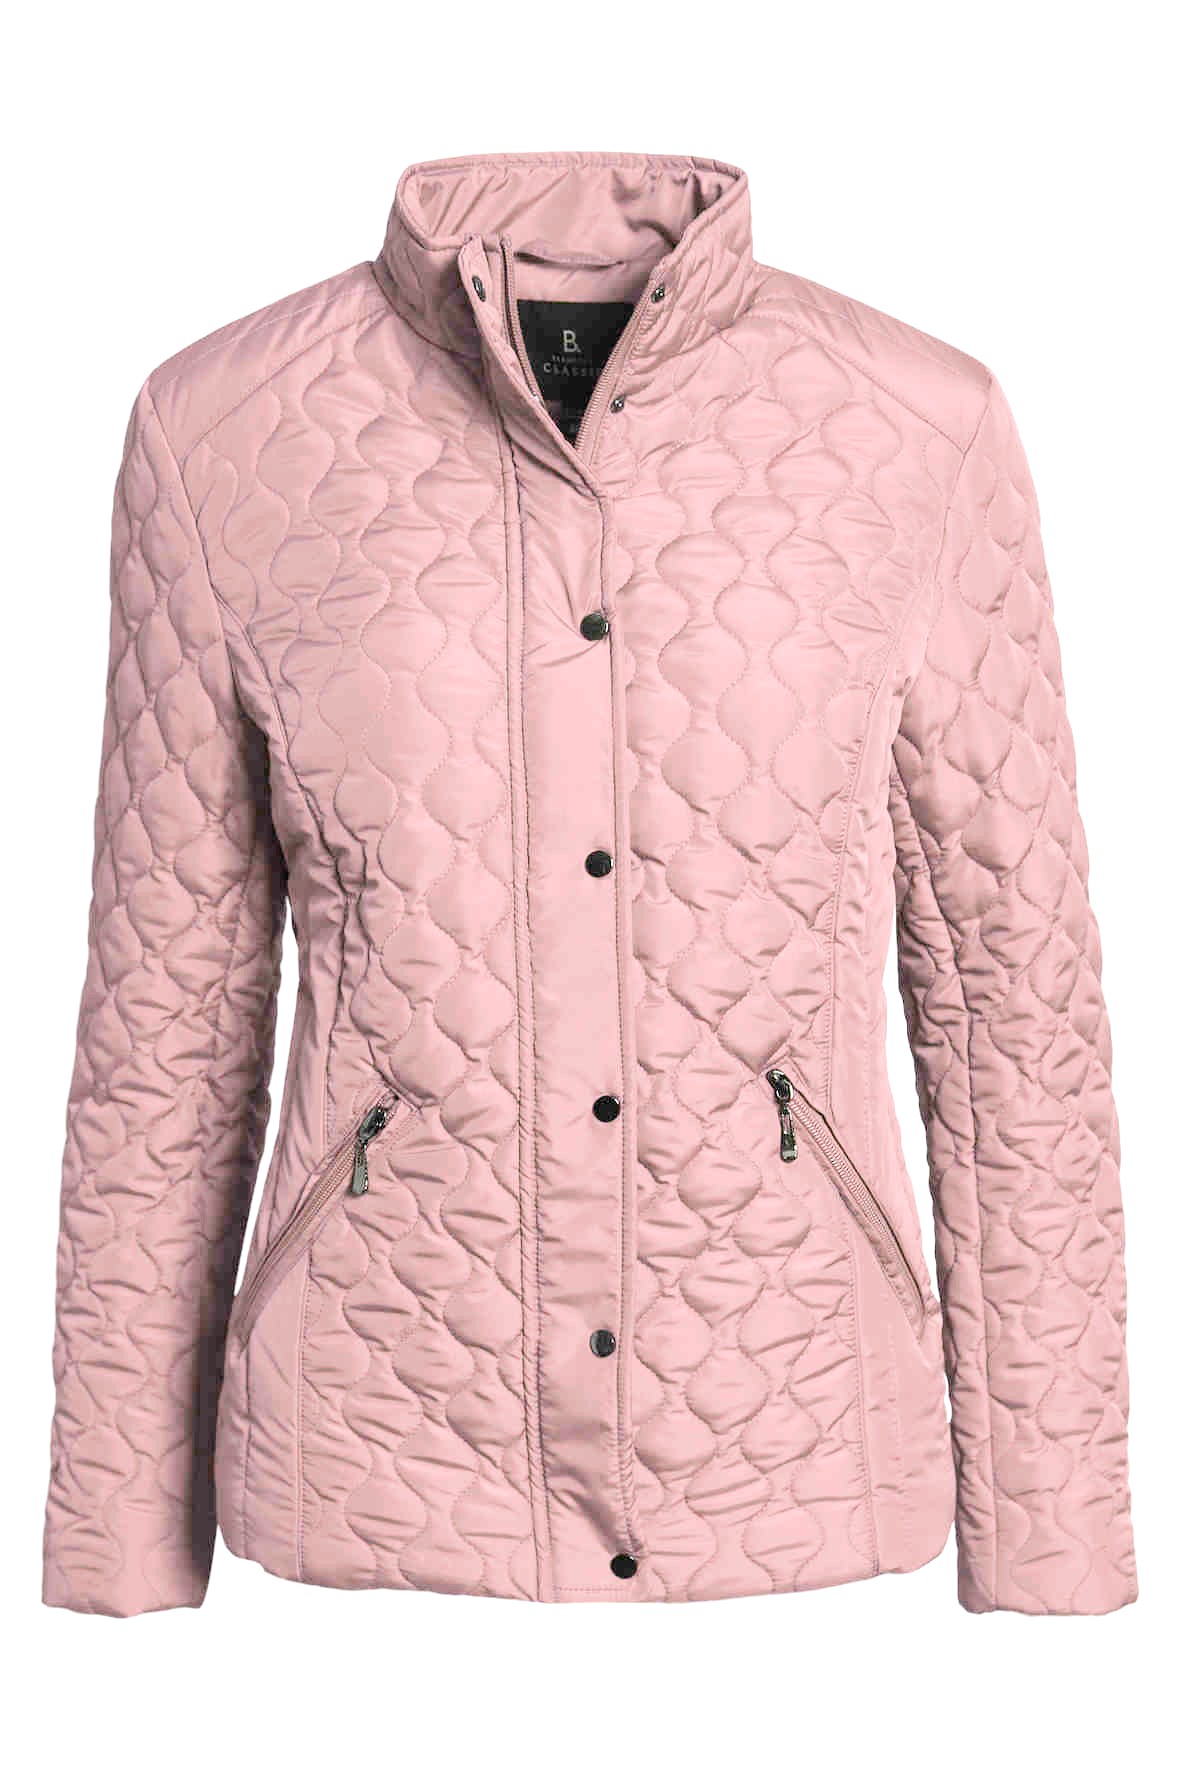 Becks Ud Snavset Brandtex Quiltet jakke til damer - kort model - rosafarvet - Hos Lohse